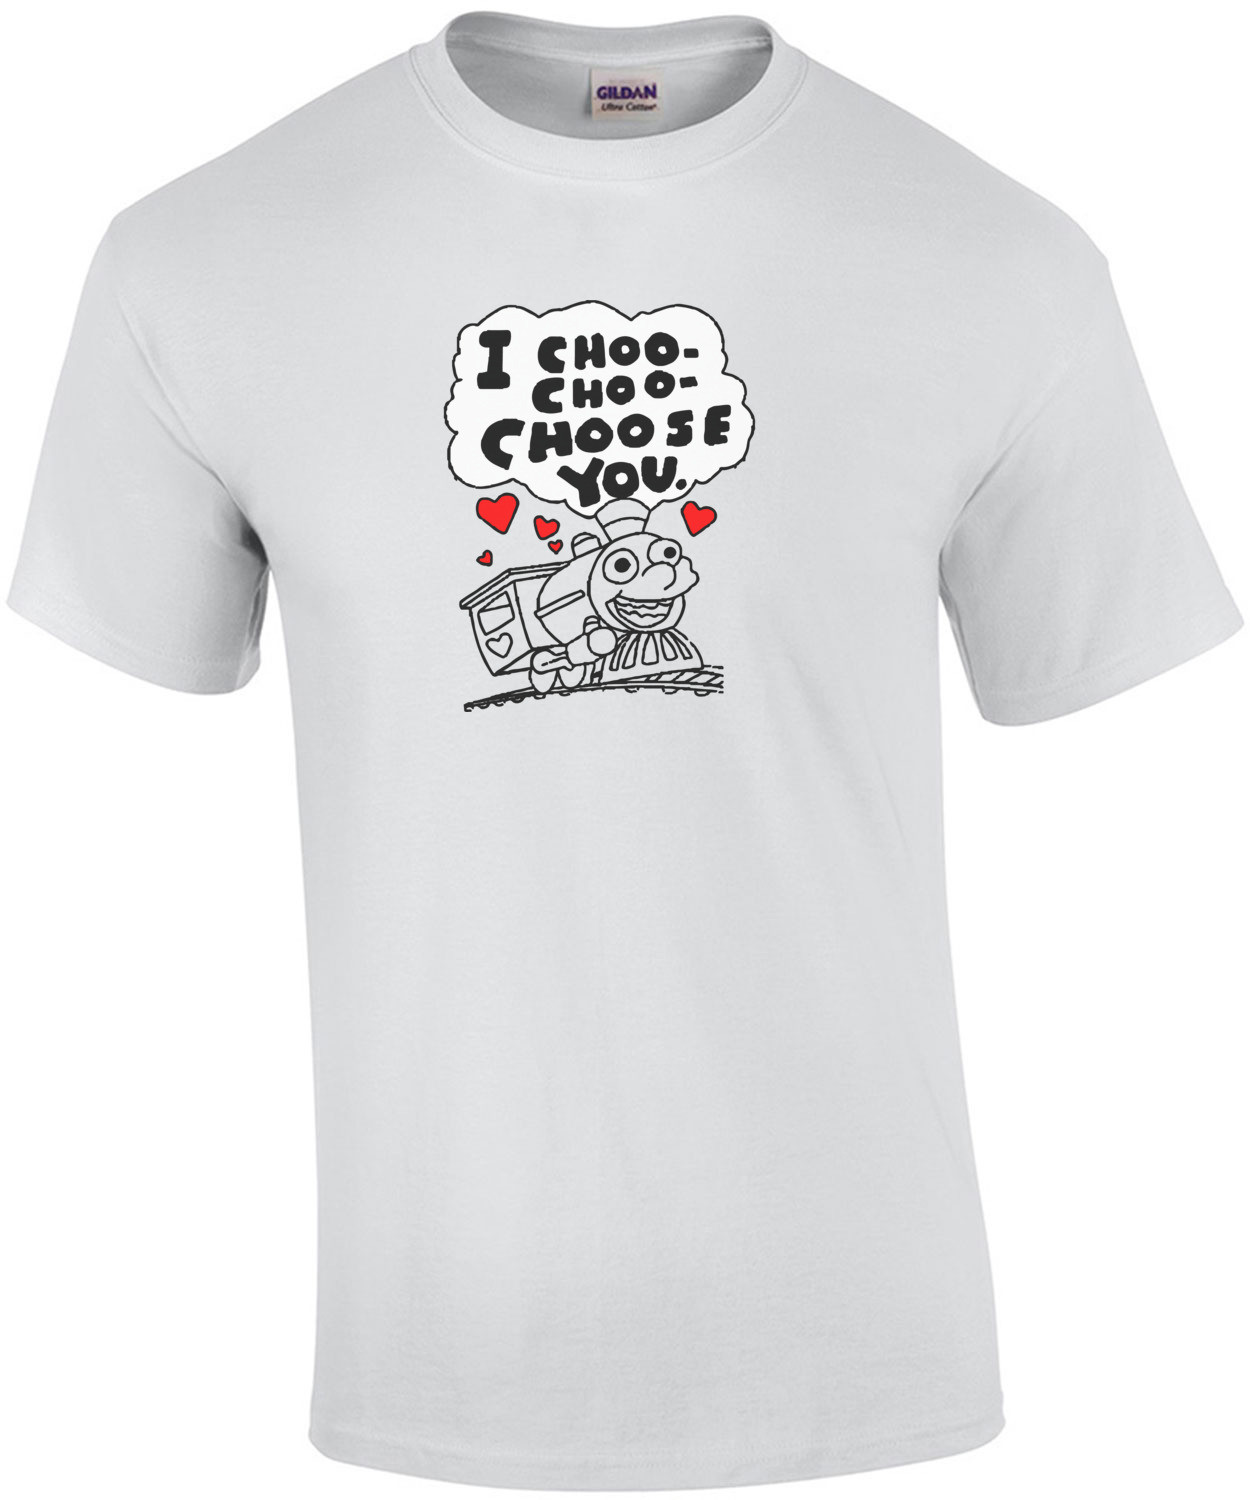 I choo-choo choose you - happy valentines - t-shirt